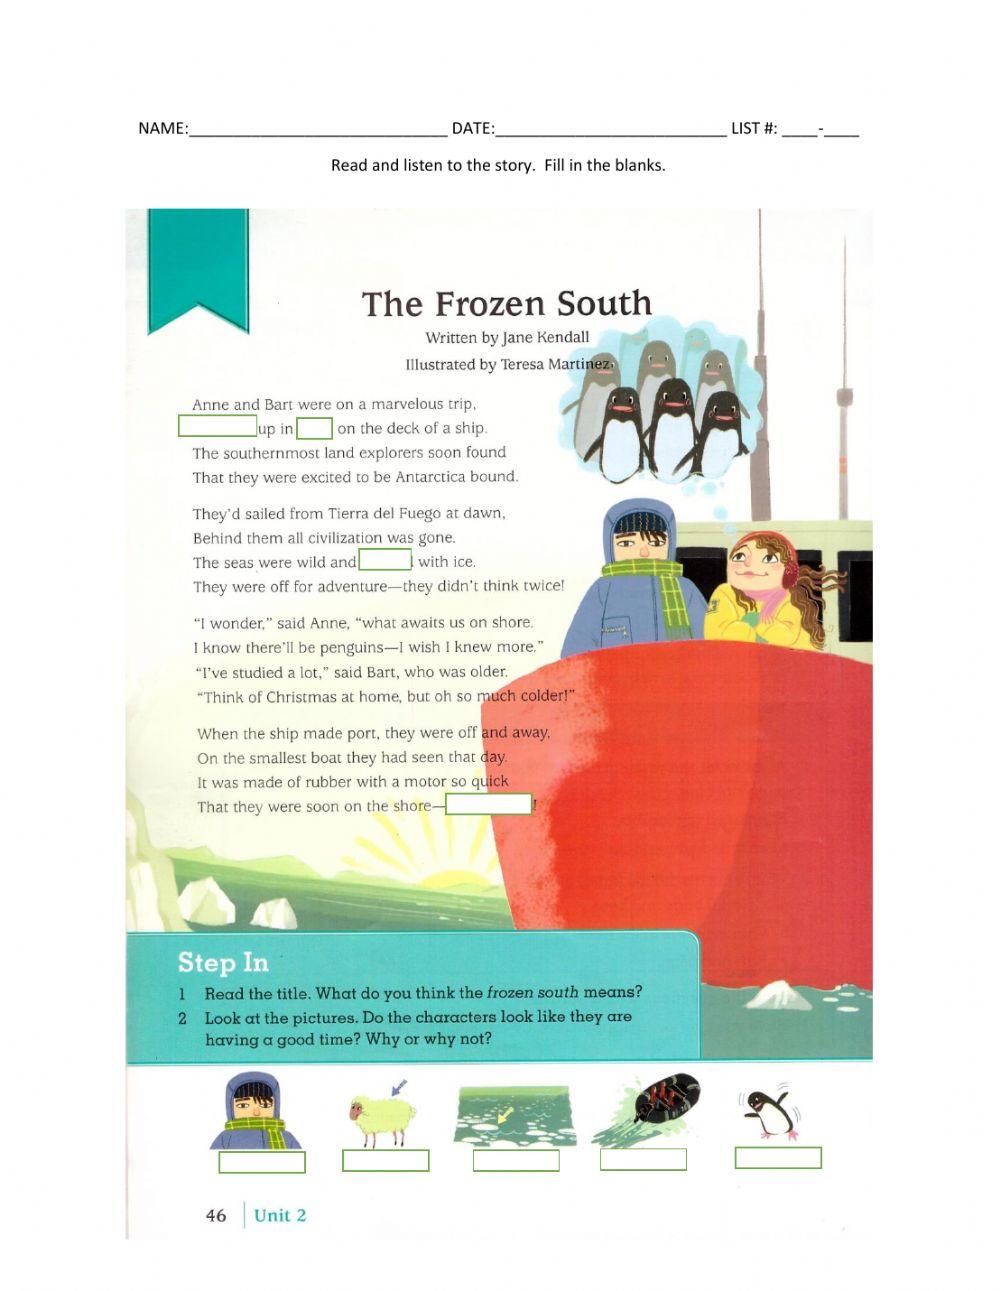 6-The Frozen South p. 46